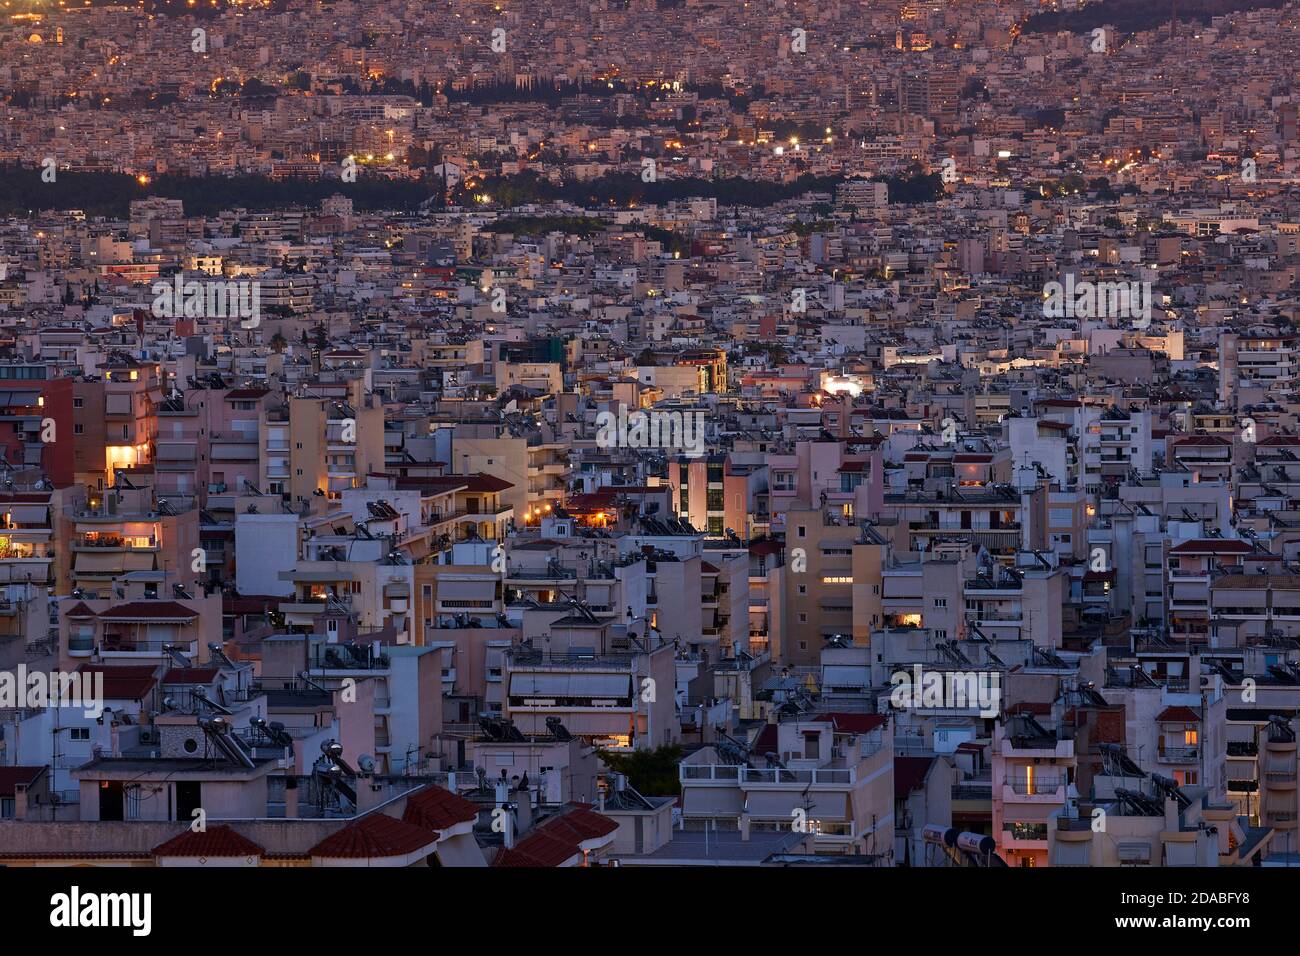 Urban density Athens seen at night Stock Photo